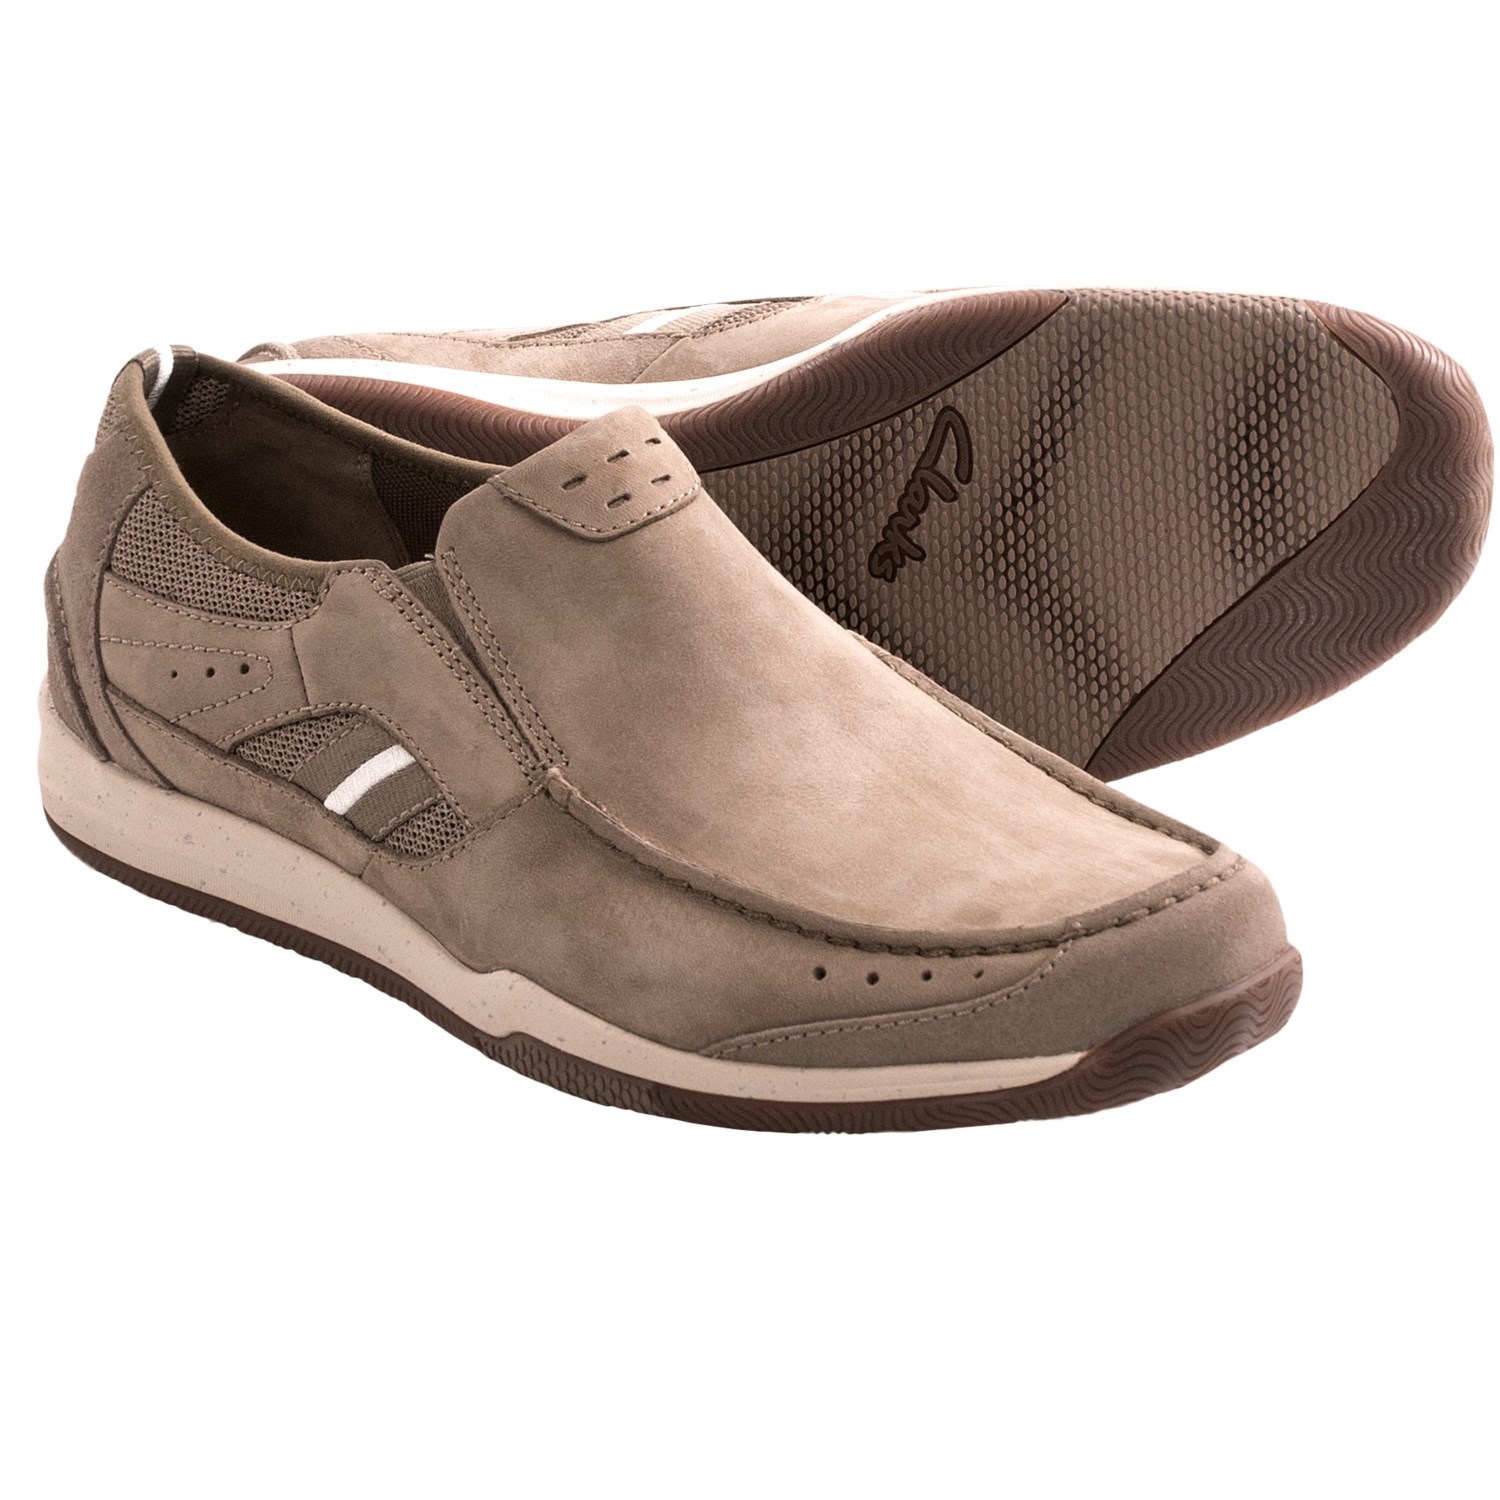 Clarks Watkins Park Shoes - Nubuck, Slip-Ons (For Men)